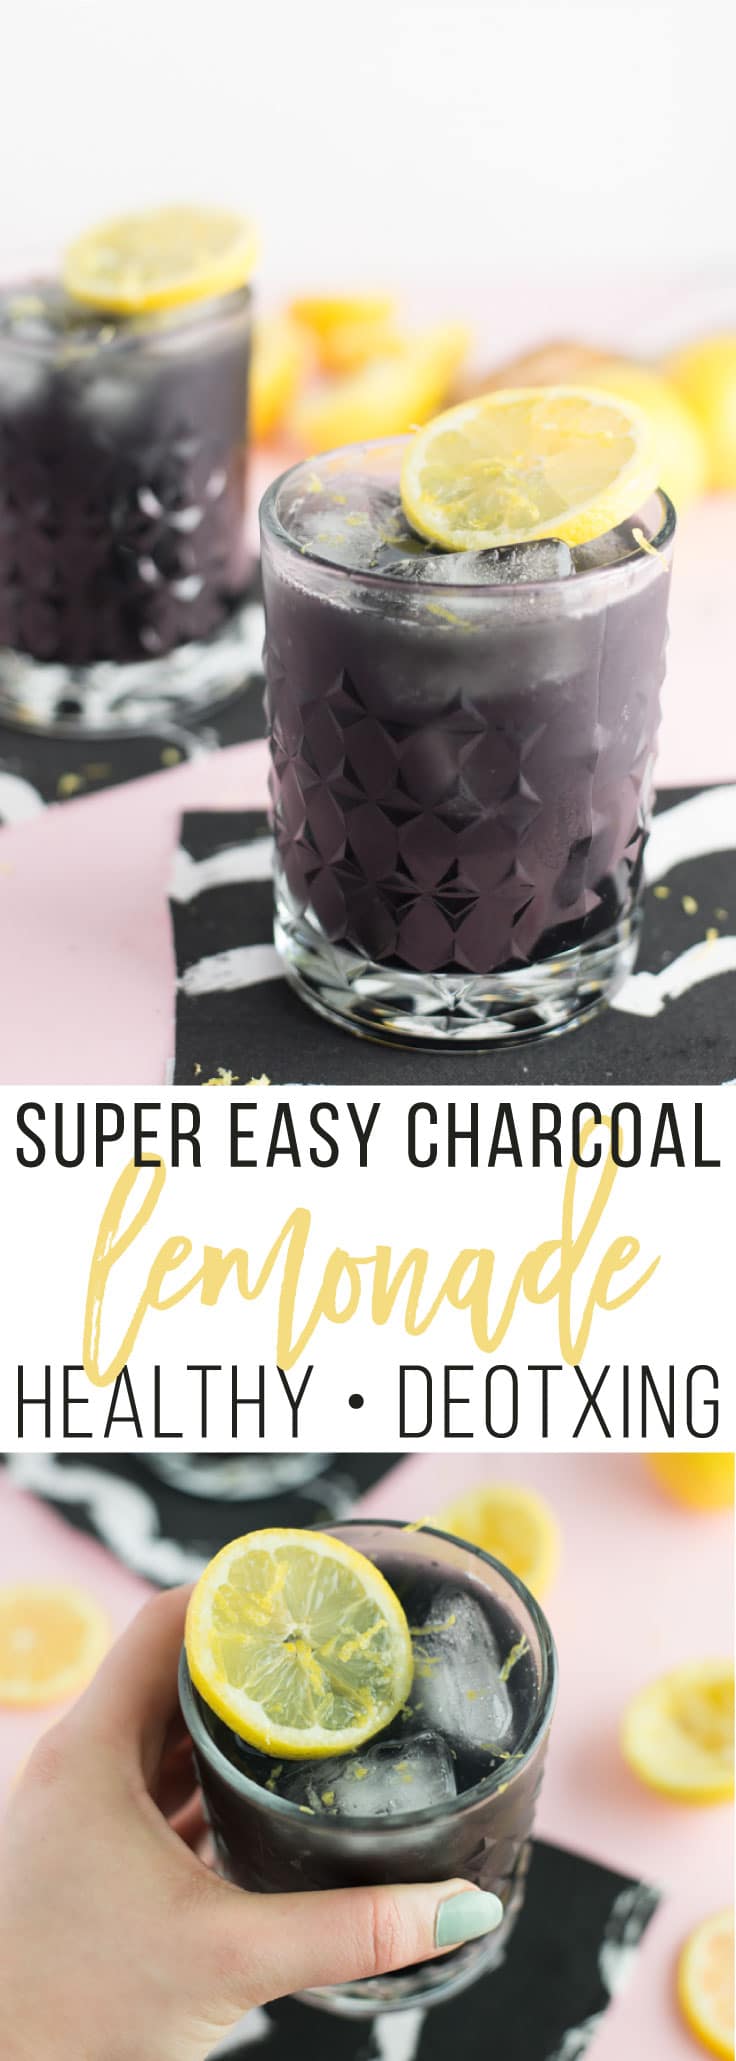 Super Easy Charcoal Lemonade! • Plant-Based Food Blog, Vegan ...